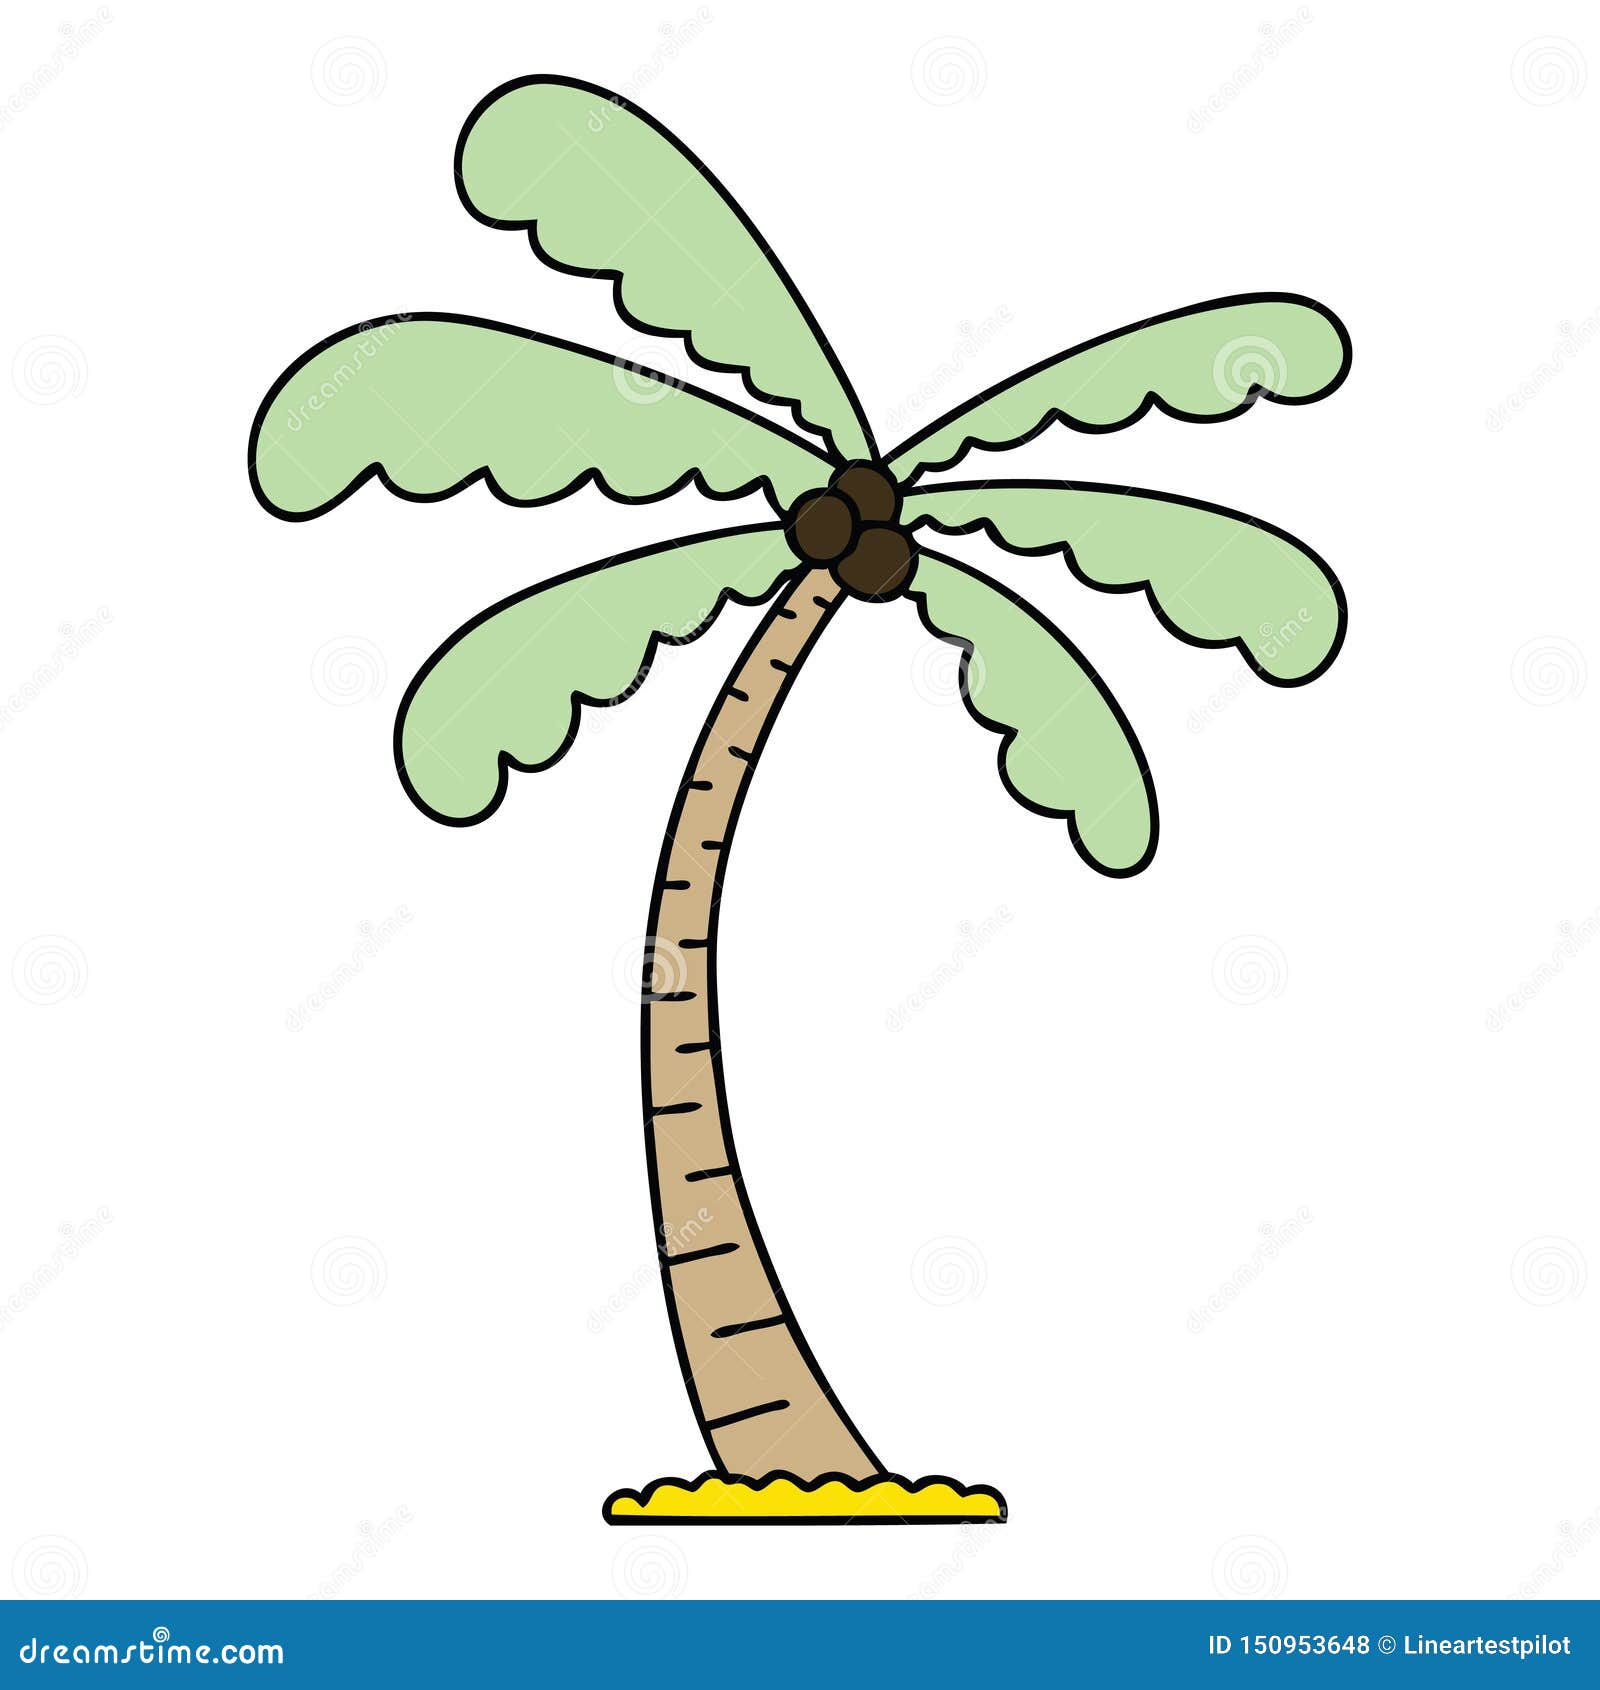 A Creative Quirky Hand Drawn Cartoon Palm Tree Stock Vector ...